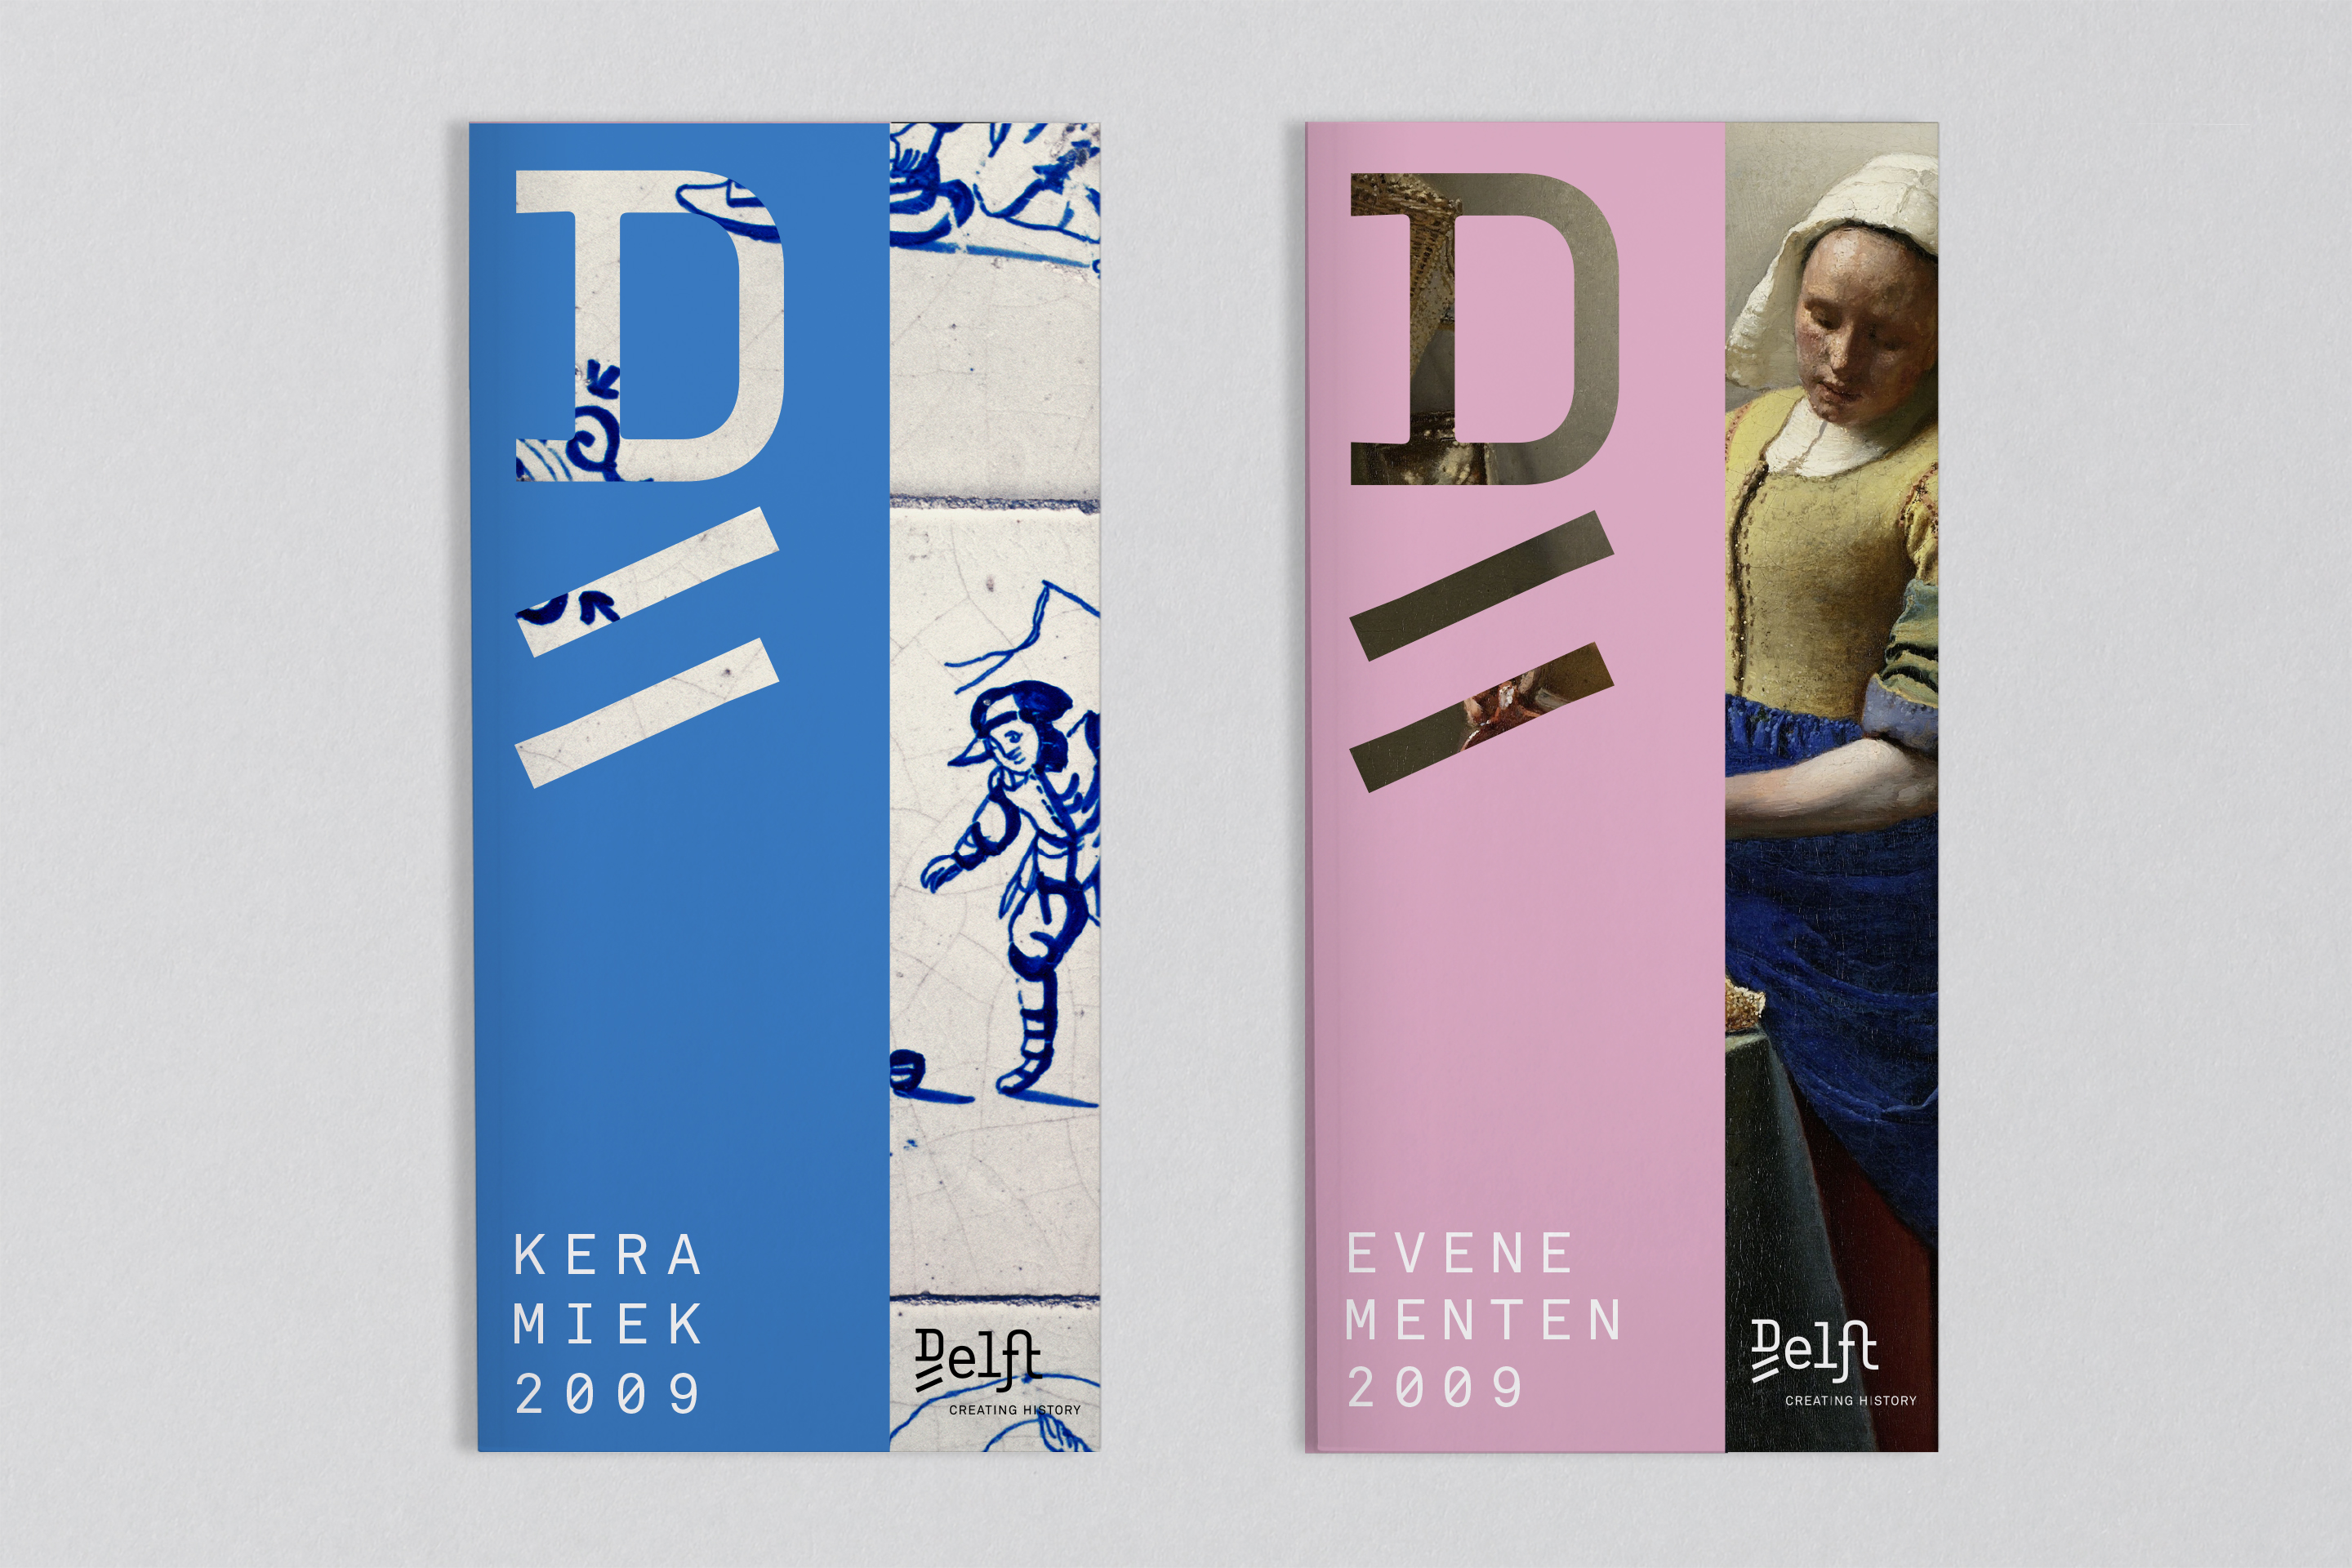 studio dumbar design visual brand identity Delft City Marketing flyer design